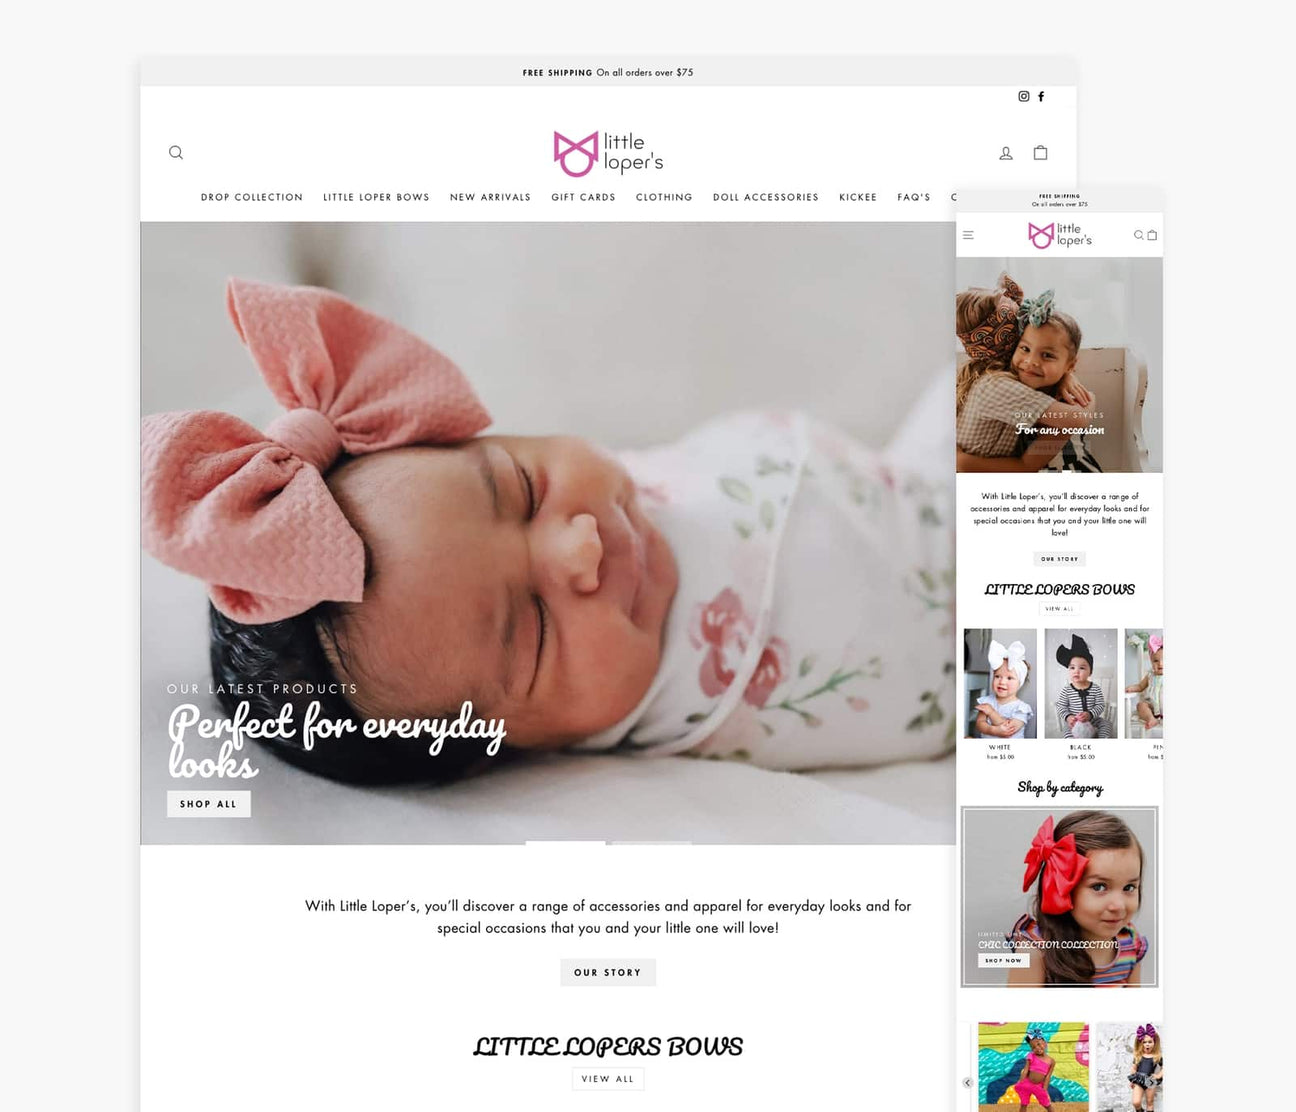 Ecommerce Pro sets up premier online fashion boutique Little Lopers with a fashionable Shopify store.